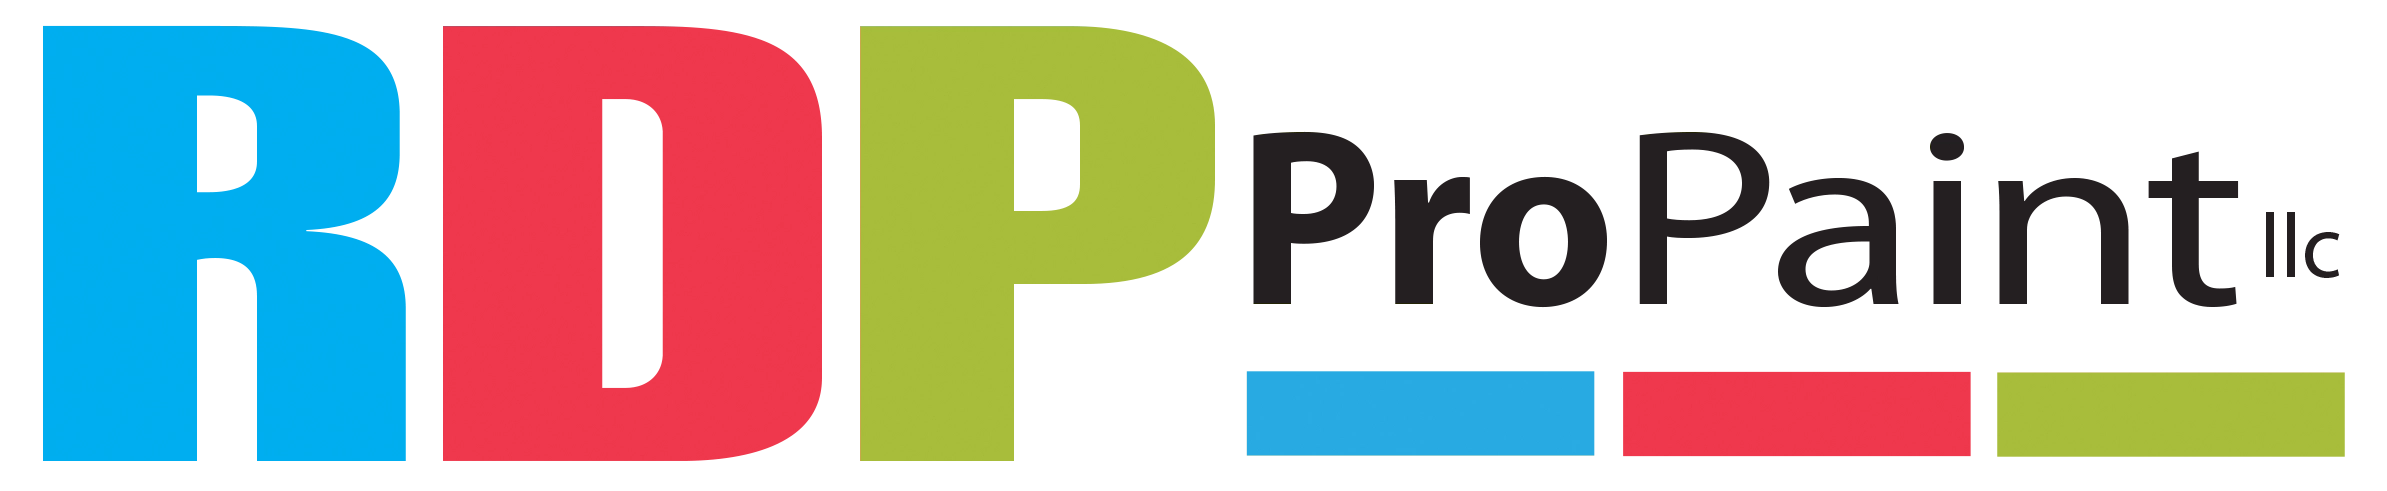 RDP Pro Paint Logo